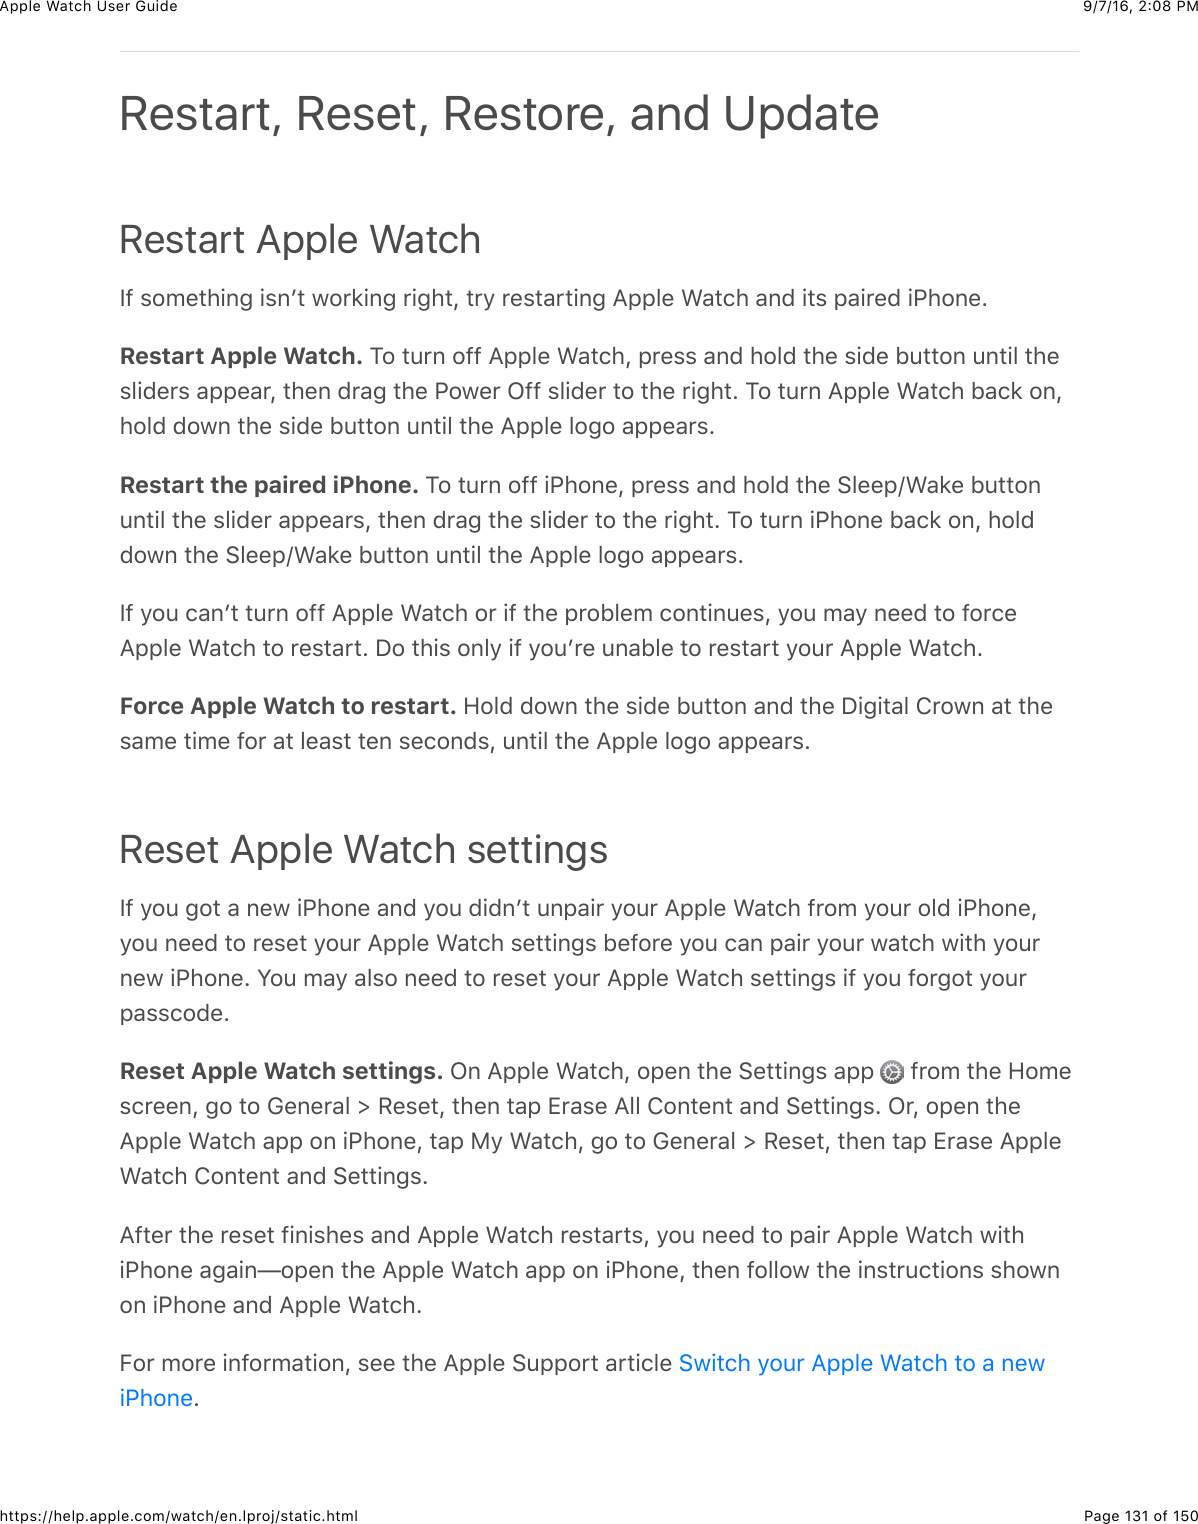 9/7/16, 2)08 PMApple Watch User GuidePage 131 of 150https://help.apple.com/watch/en.lproj/static.htmlRestart Apple WatchY@&amp;$#5%3)+,-&amp;+$,W3&amp;7#*8+,-&amp;*+-)3J&amp;3*/&amp;*%$3&apos;*3+,-&amp;=22&quot;%&amp;&gt;&apos;3()&amp;&apos;,0&amp;+3$&amp;2&apos;+*%0&amp;+G)#,%CRestart Apple Watch. 1#&amp;34*,&amp;#@@&amp;=22&quot;%&amp;&gt;&apos;3()J&amp;2*%$$&amp;&apos;,0&amp;)#&quot;0&amp;3)%&amp;$+0%&amp;B433#,&amp;4,3+&quot;&amp;3)%$&quot;+0%*$&amp;&apos;22%&apos;*J&amp;3)%,&amp;0*&apos;-&amp;3)%&amp;G#7%*&amp;L@@&amp;$&quot;+0%*&amp;3#&amp;3)%&amp;*+-)3C&amp;1#&amp;34*,&amp;=22&quot;%&amp;&gt;&apos;3()&amp;B&apos;(8&amp;#,J)#&quot;0&amp;0#7,&amp;3)%&amp;$+0%&amp;B433#,&amp;4,3+&quot;&amp;3)%&amp;=22&quot;%&amp;&quot;#-#&amp;&apos;22%&apos;*$CRestart the paired iPhone. 1#&amp;34*,&amp;#@@&amp;+G)#,%J&amp;2*%$$&amp;&apos;,0&amp;)#&quot;0&amp;3)%&amp;6&quot;%%2o&gt;&apos;8%&amp;B433#,4,3+&quot;&amp;3)%&amp;$&quot;+0%*&amp;&apos;22%&apos;*$J&amp;3)%,&amp;0*&apos;-&amp;3)%&amp;$&quot;+0%*&amp;3#&amp;3)%&amp;*+-)3C&amp;1#&amp;34*,&amp;+G)#,%&amp;B&apos;(8&amp;#,J&amp;)#&quot;00#7,&amp;3)%&amp;6&quot;%%2o&gt;&apos;8%&amp;B433#,&amp;4,3+&quot;&amp;3)%&amp;=22&quot;%&amp;&quot;#-#&amp;&apos;22%&apos;*$CY@&amp;/#4&amp;(&apos;,W3&amp;34*,&amp;#@@&amp;=22&quot;%&amp;&gt;&apos;3()&amp;#*&amp;+@&amp;3)%&amp;2*#B&quot;%5&amp;(#,3+,4%$J&amp;/#4&amp;5&apos;/&amp;,%%0&amp;3#&amp;@#*(%=22&quot;%&amp;&gt;&apos;3()&amp;3#&amp;*%$3&apos;*3C&amp;I#&amp;3)+$&amp;#,&quot;/&amp;+@&amp;/#4W*%&amp;4,&apos;B&quot;%&amp;3#&amp;*%$3&apos;*3&amp;/#4*&amp;=22&quot;%&amp;&gt;&apos;3()CForce Apple Watch to restart. 9#&quot;0&amp;0#7,&amp;3)%&amp;$+0%&amp;B433#,&amp;&apos;,0&amp;3)%&amp;I+-+3&apos;&quot;&amp;!*#7,&amp;&apos;3&amp;3)%$&apos;5%&amp;3+5%&amp;@#*&amp;&apos;3&amp;&quot;%&apos;$3&amp;3%,&amp;$%(#,0$J&amp;4,3+&quot;&amp;3)%&amp;=22&quot;%&amp;&quot;#-#&amp;&apos;22%&apos;*$CReset Apple Watch settingsY@&amp;/#4&amp;-#3&amp;&apos;&amp;,%7&amp;+G)#,%&amp;&apos;,0&amp;/#4&amp;0+0,W3&amp;4,2&apos;+*&amp;/#4*&amp;=22&quot;%&amp;&gt;&apos;3()&amp;@*#5&amp;/#4*&amp;#&quot;0&amp;+G)#,%J/#4&amp;,%%0&amp;3#&amp;*%$%3&amp;/#4*&amp;=22&quot;%&amp;&gt;&apos;3()&amp;$%33+,-$&amp;B%@#*%&amp;/#4&amp;(&apos;,&amp;2&apos;+*&amp;/#4*&amp;7&apos;3()&amp;7+3)&amp;/#4*,%7&amp;+G)#,%C&amp;S#4&amp;5&apos;/&amp;&apos;&quot;$#&amp;,%%0&amp;3#&amp;*%$%3&amp;/#4*&amp;=22&quot;%&amp;&gt;&apos;3()&amp;$%33+,-$&amp;+@&amp;/#4&amp;@#*-#3&amp;/#4*2&apos;$$(#0%CReset Apple Watch settings. L,&amp;=22&quot;%&amp;&gt;&apos;3()J&amp;#2%,&amp;3)%&amp;6%33+,-$&amp;&apos;22&amp; &amp;@*#5&amp;3)%&amp;9#5%$(*%%,J&amp;-#&amp;3#&amp;D%,%*&apos;&quot;&amp;d&amp;H%$%3J&amp;3)%,&amp;3&apos;2&amp;Z*&apos;$%&amp;=&quot;&quot;&amp;!#,3%,3&amp;&apos;,0&amp;6%33+,-$C&amp;L*J&amp;#2%,&amp;3)%=22&quot;%&amp;&gt;&apos;3()&amp;&apos;22&amp;#,&amp;+G)#,%J&amp;3&apos;2&amp;F/&amp;&gt;&apos;3()J&amp;-#&amp;3#&amp;D%,%*&apos;&quot;&amp;d&amp;H%$%3J&amp;3)%,&amp;3&apos;2&amp;Z*&apos;$%&amp;=22&quot;%&gt;&apos;3()&amp;!#,3%,3&amp;&apos;,0&amp;6%33+,-$C=@3%*&amp;3)%&amp;*%$%3&amp;@+,+$)%$&amp;&apos;,0&amp;=22&quot;%&amp;&gt;&apos;3()&amp;*%$3&apos;*3$J&amp;/#4&amp;,%%0&amp;3#&amp;2&apos;+*&amp;=22&quot;%&amp;&gt;&apos;3()&amp;7+3)+G)#,%&amp;&apos;-&apos;+,T#2%,&amp;3)%&amp;=22&quot;%&amp;&gt;&apos;3()&amp;&apos;22&amp;#,&amp;+G)#,%J&amp;3)%,&amp;@#&quot;&quot;#7&amp;3)%&amp;+,$3*4(3+#,$&amp;$)#7,#,&amp;+G)#,%&amp;&apos;,0&amp;=22&quot;%&amp;&gt;&apos;3()CE#*&amp;5#*%&amp;+,@#*5&apos;3+#,J&amp;$%%&amp;3)%&amp;=22&quot;%&amp;6422#*3&amp;&apos;*3+(&quot;%&amp;CRestart, Reset, Restore, and Update67+3()&amp;/#4*&amp;=22&quot;%&amp;&gt;&apos;3()&amp;3#&amp;&apos;&amp;,%7+G)#,%